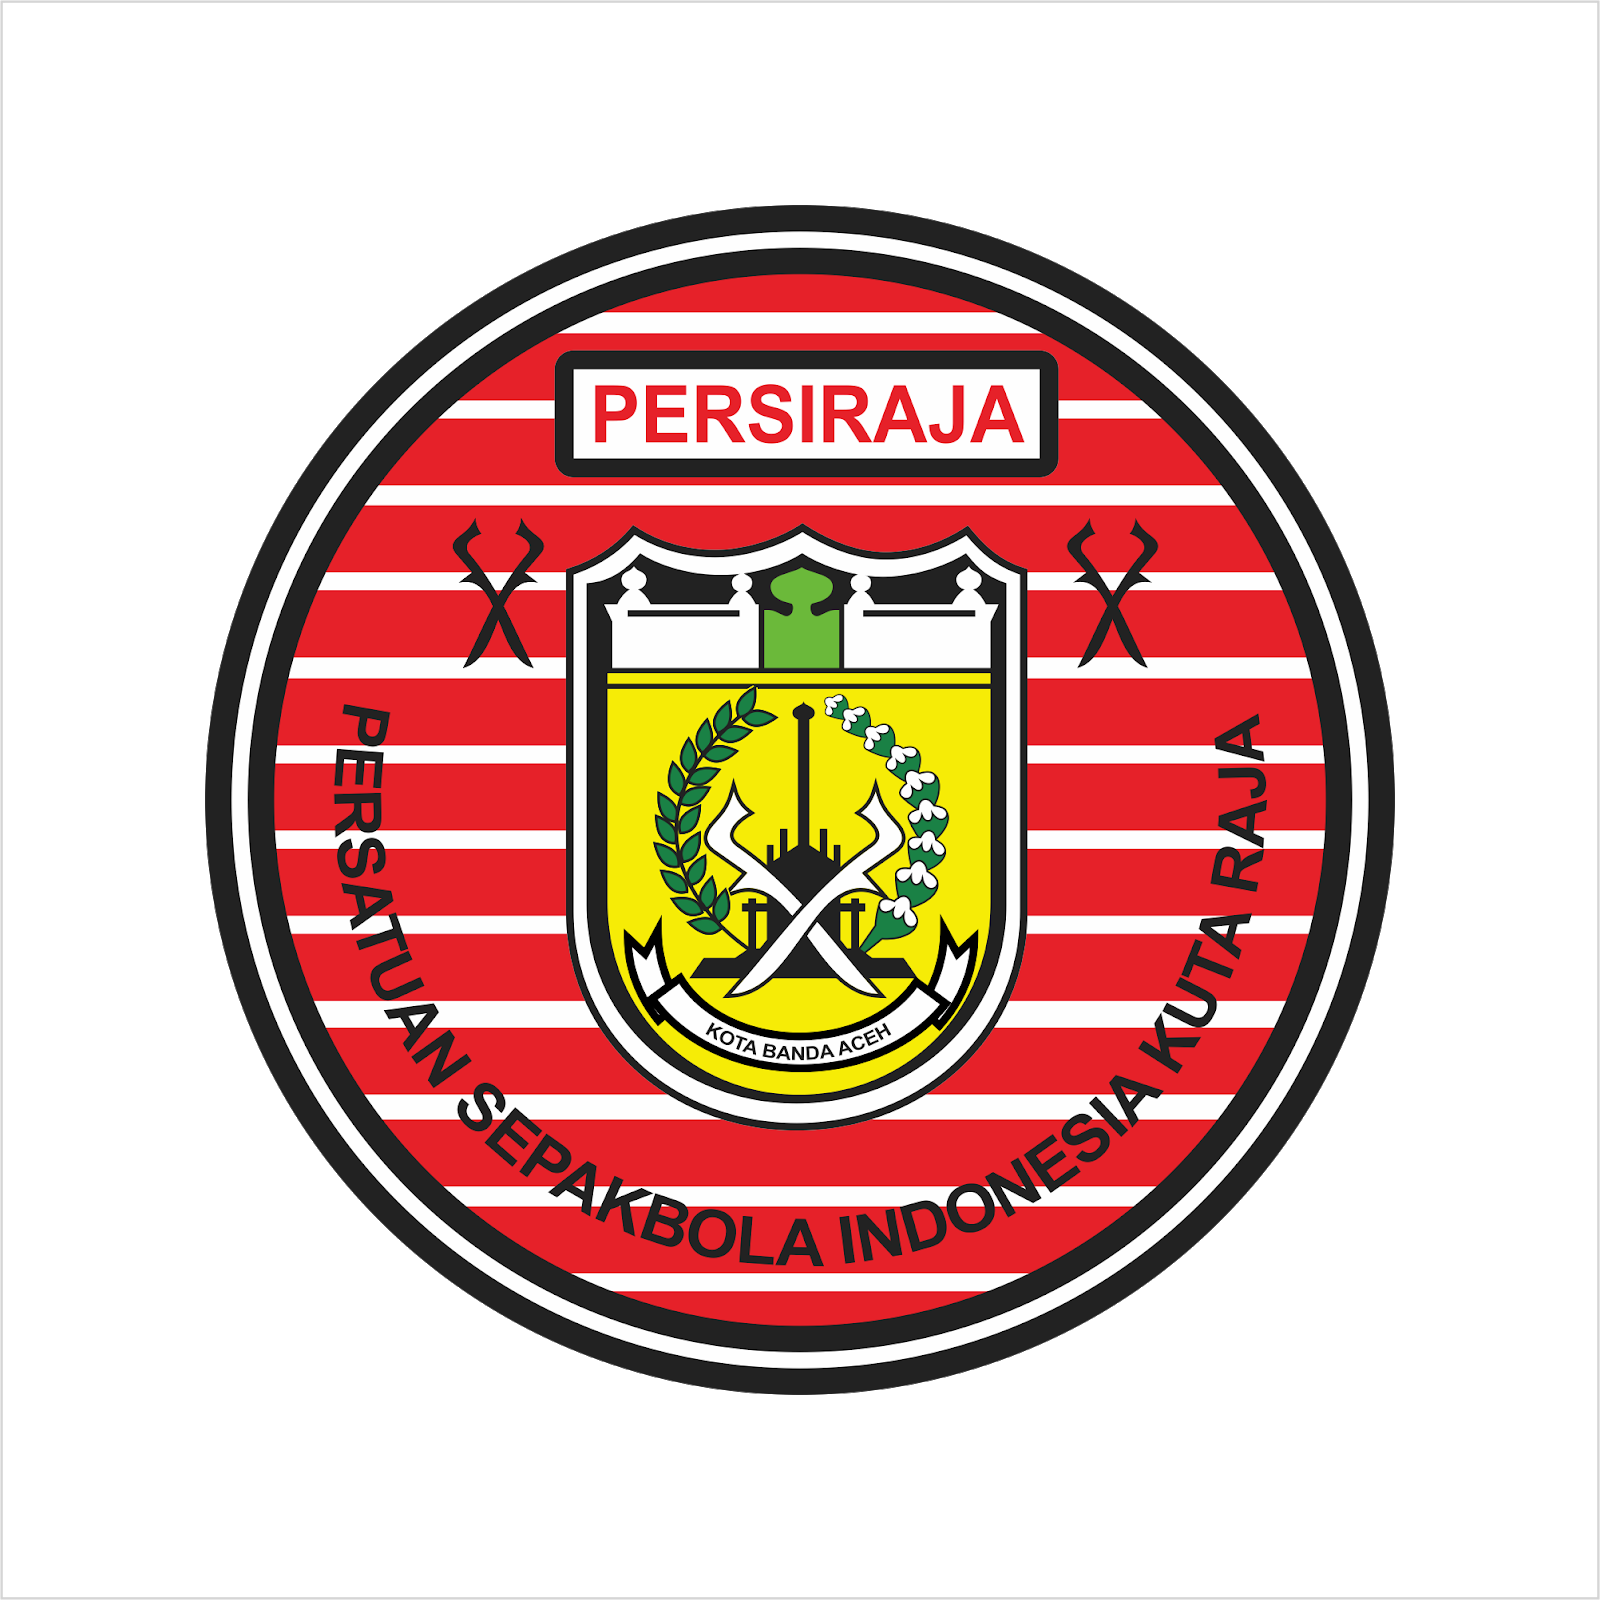 Persiraja Banda aceh Logo vector (.cdr) Free Download - BlogoVector